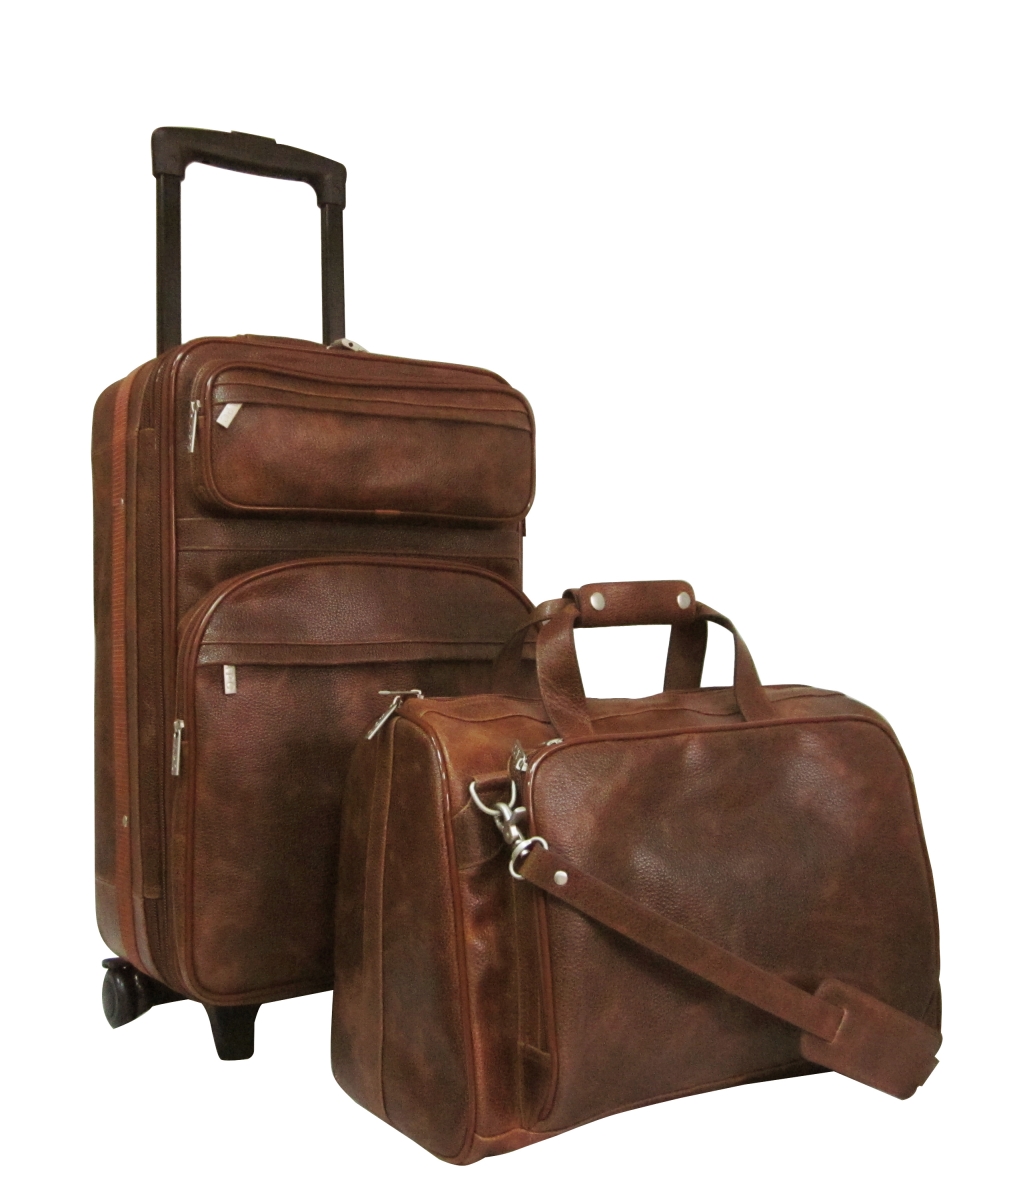 8002-4 Leather Traveler Set, Waxy Brown - 2 Piece